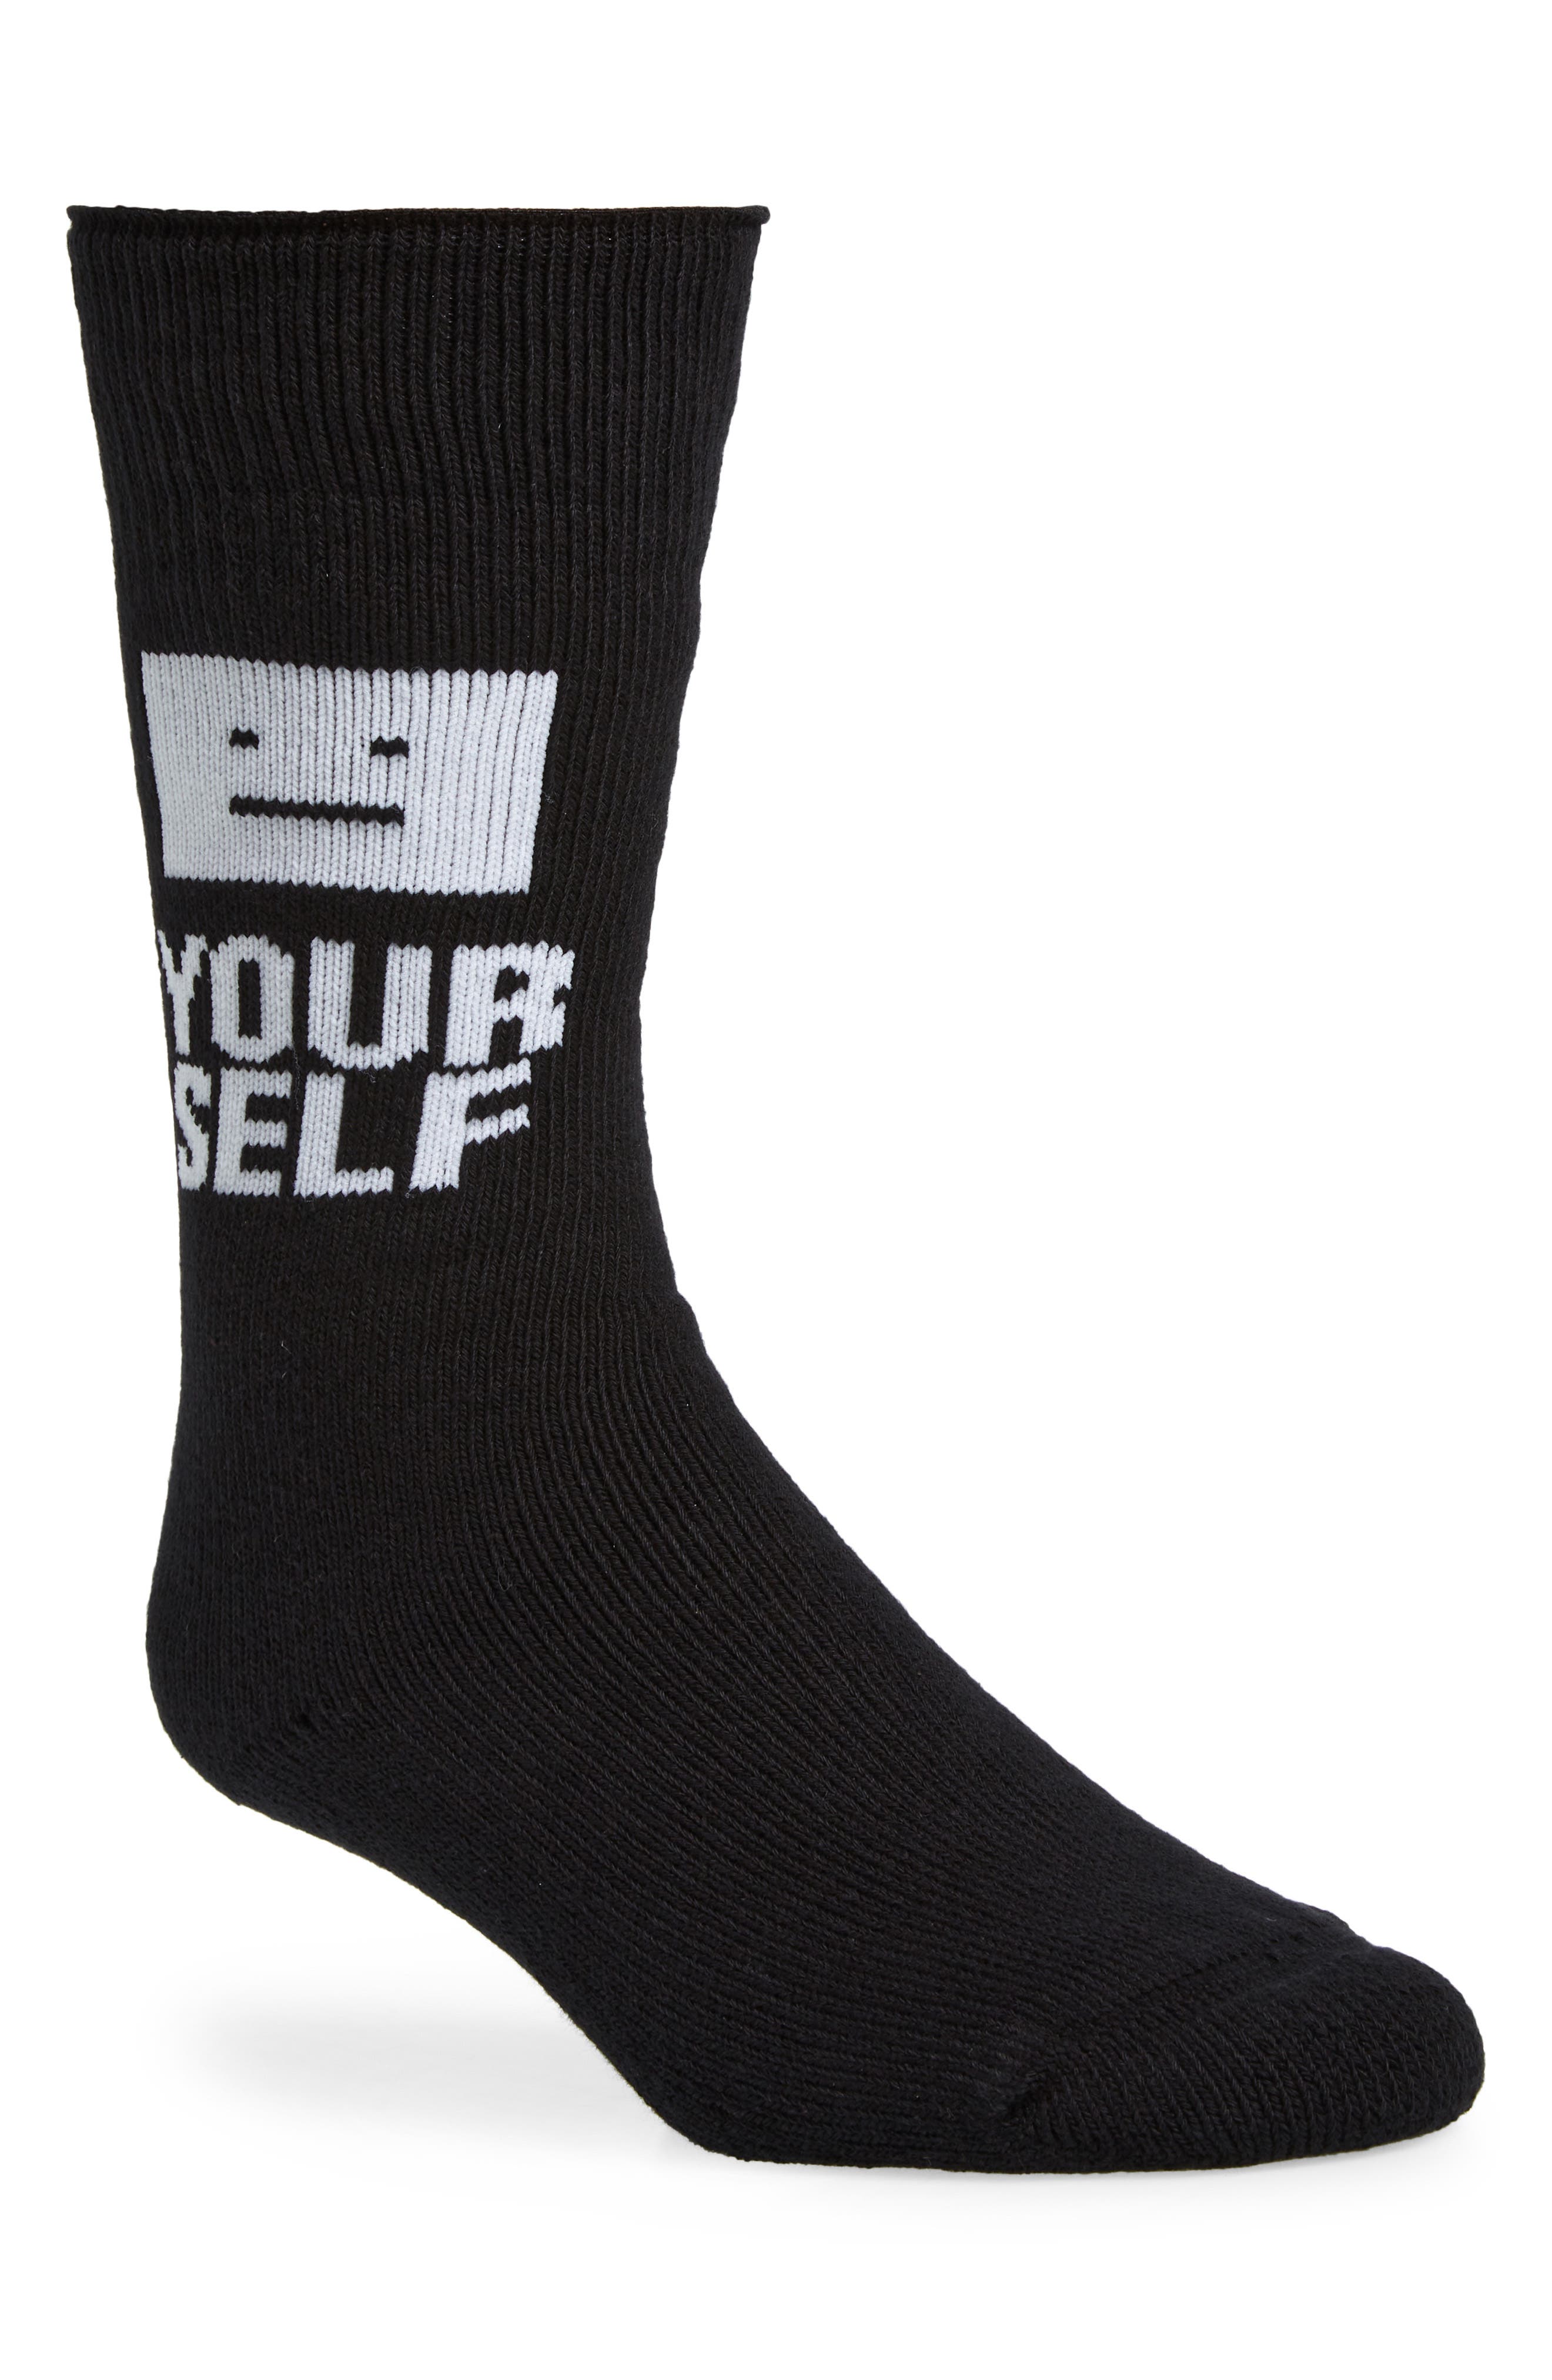 Acne Studios Face Yourself Socks in Black/White at Nordstrom, Size 37-40